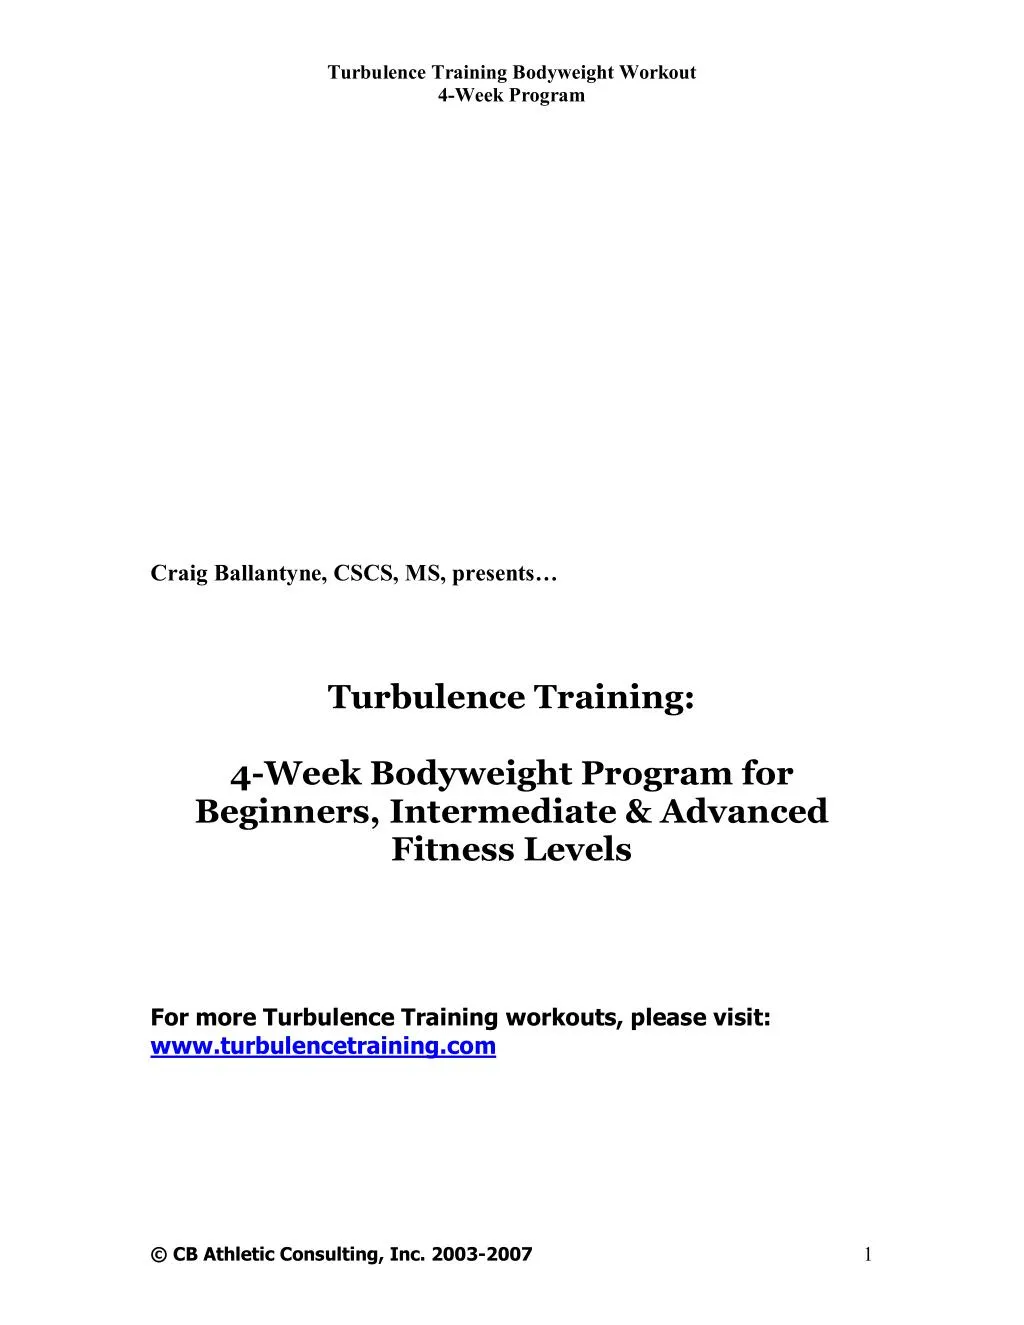 turbulence training bodyweight workout 4 week n.